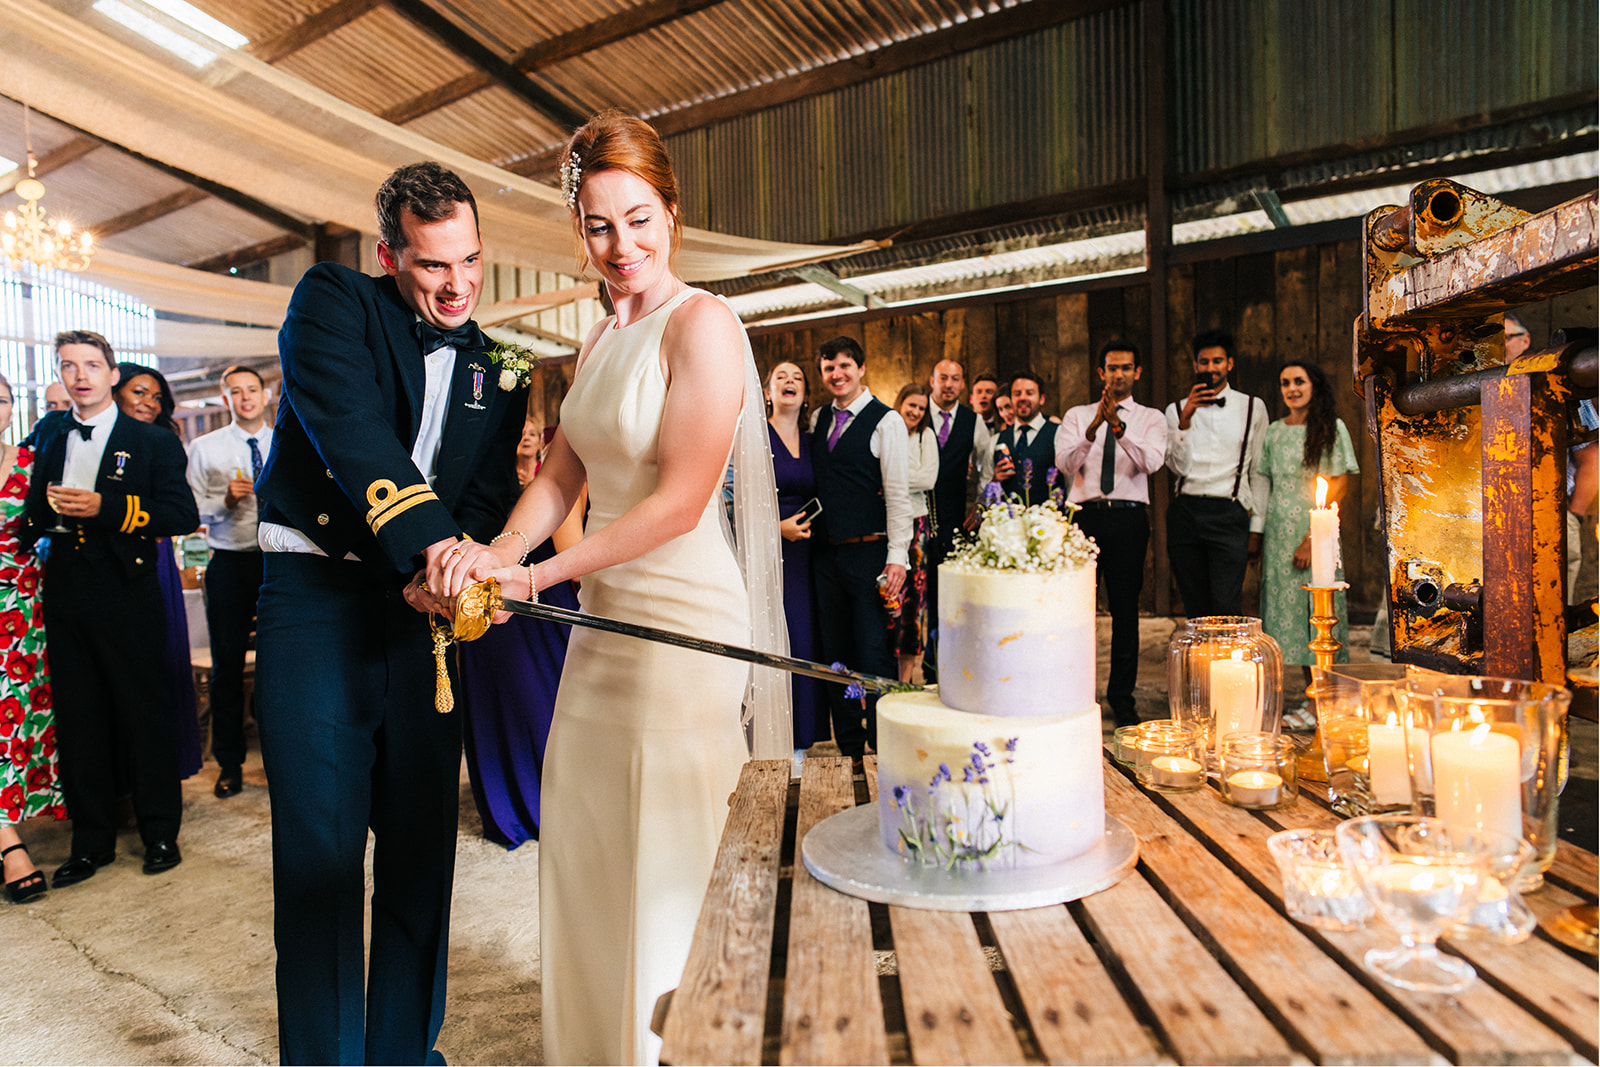 Derby DIY Farm Wedding Photography - bride and groom cut the wedding cake with a sword
